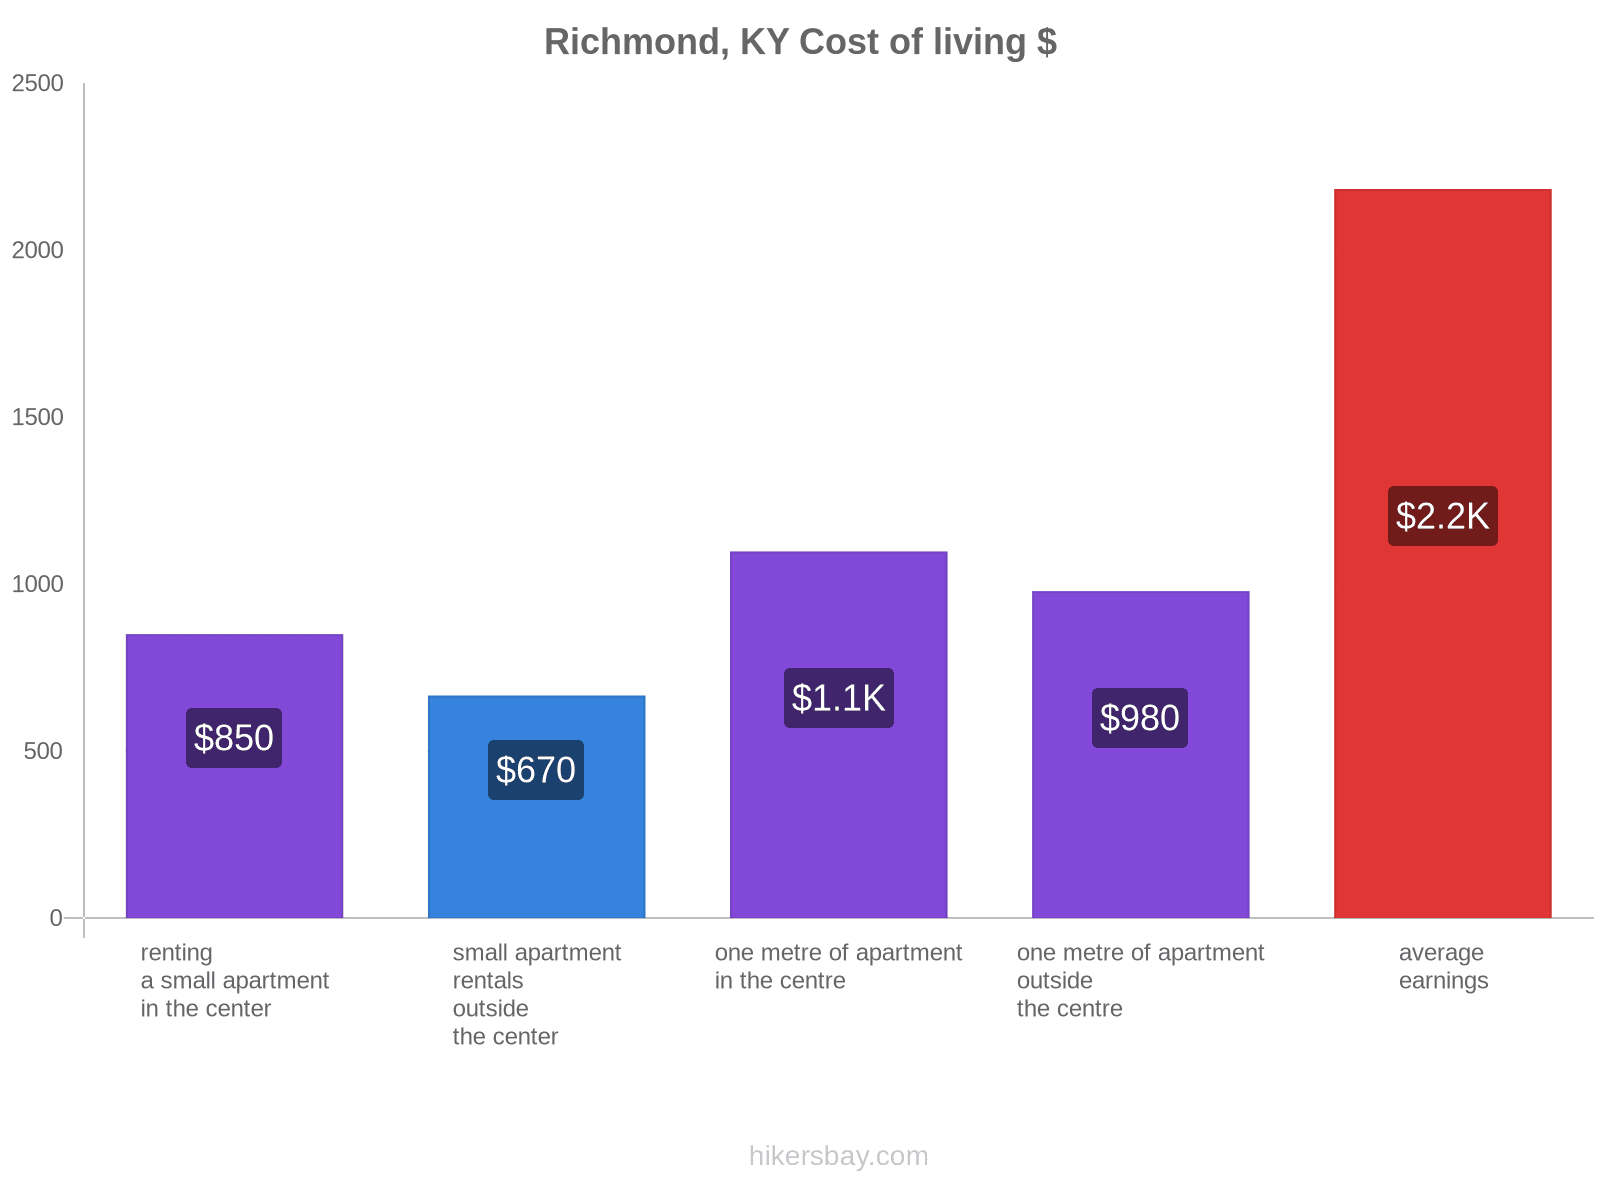 Richmond, KY cost of living hikersbay.com